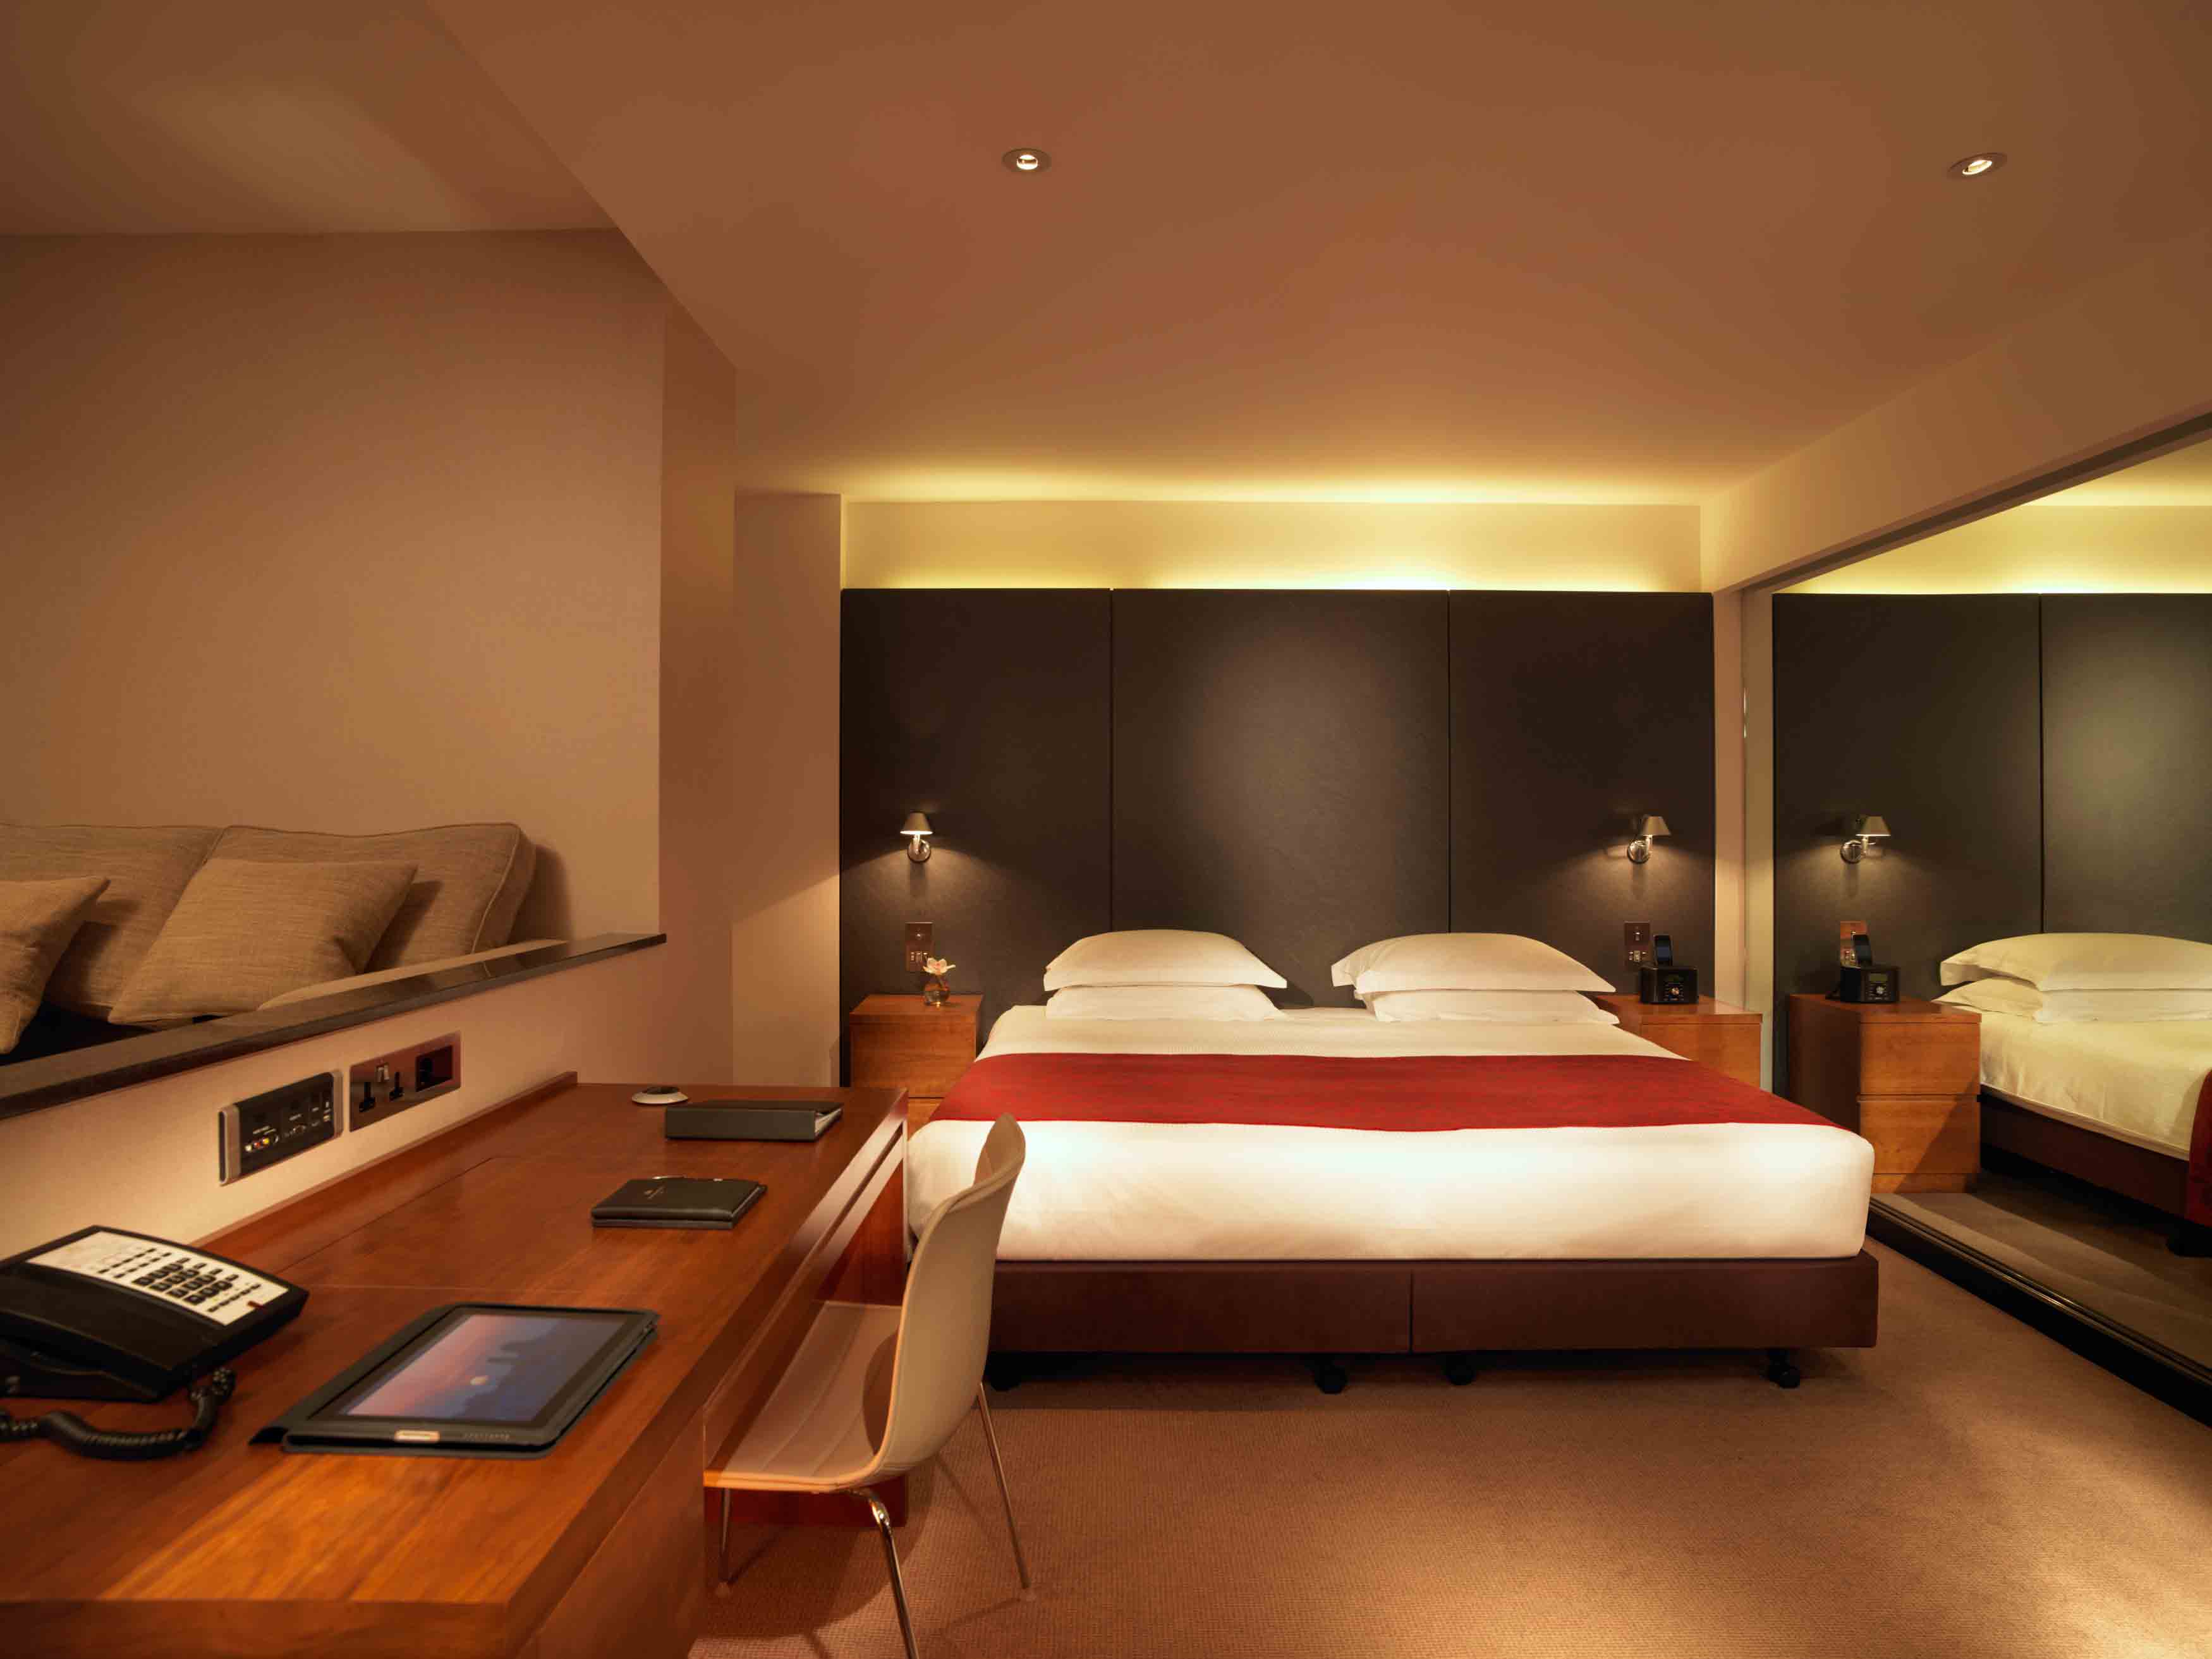 bedroom 4 - hotel royal garden - london, united kingdom